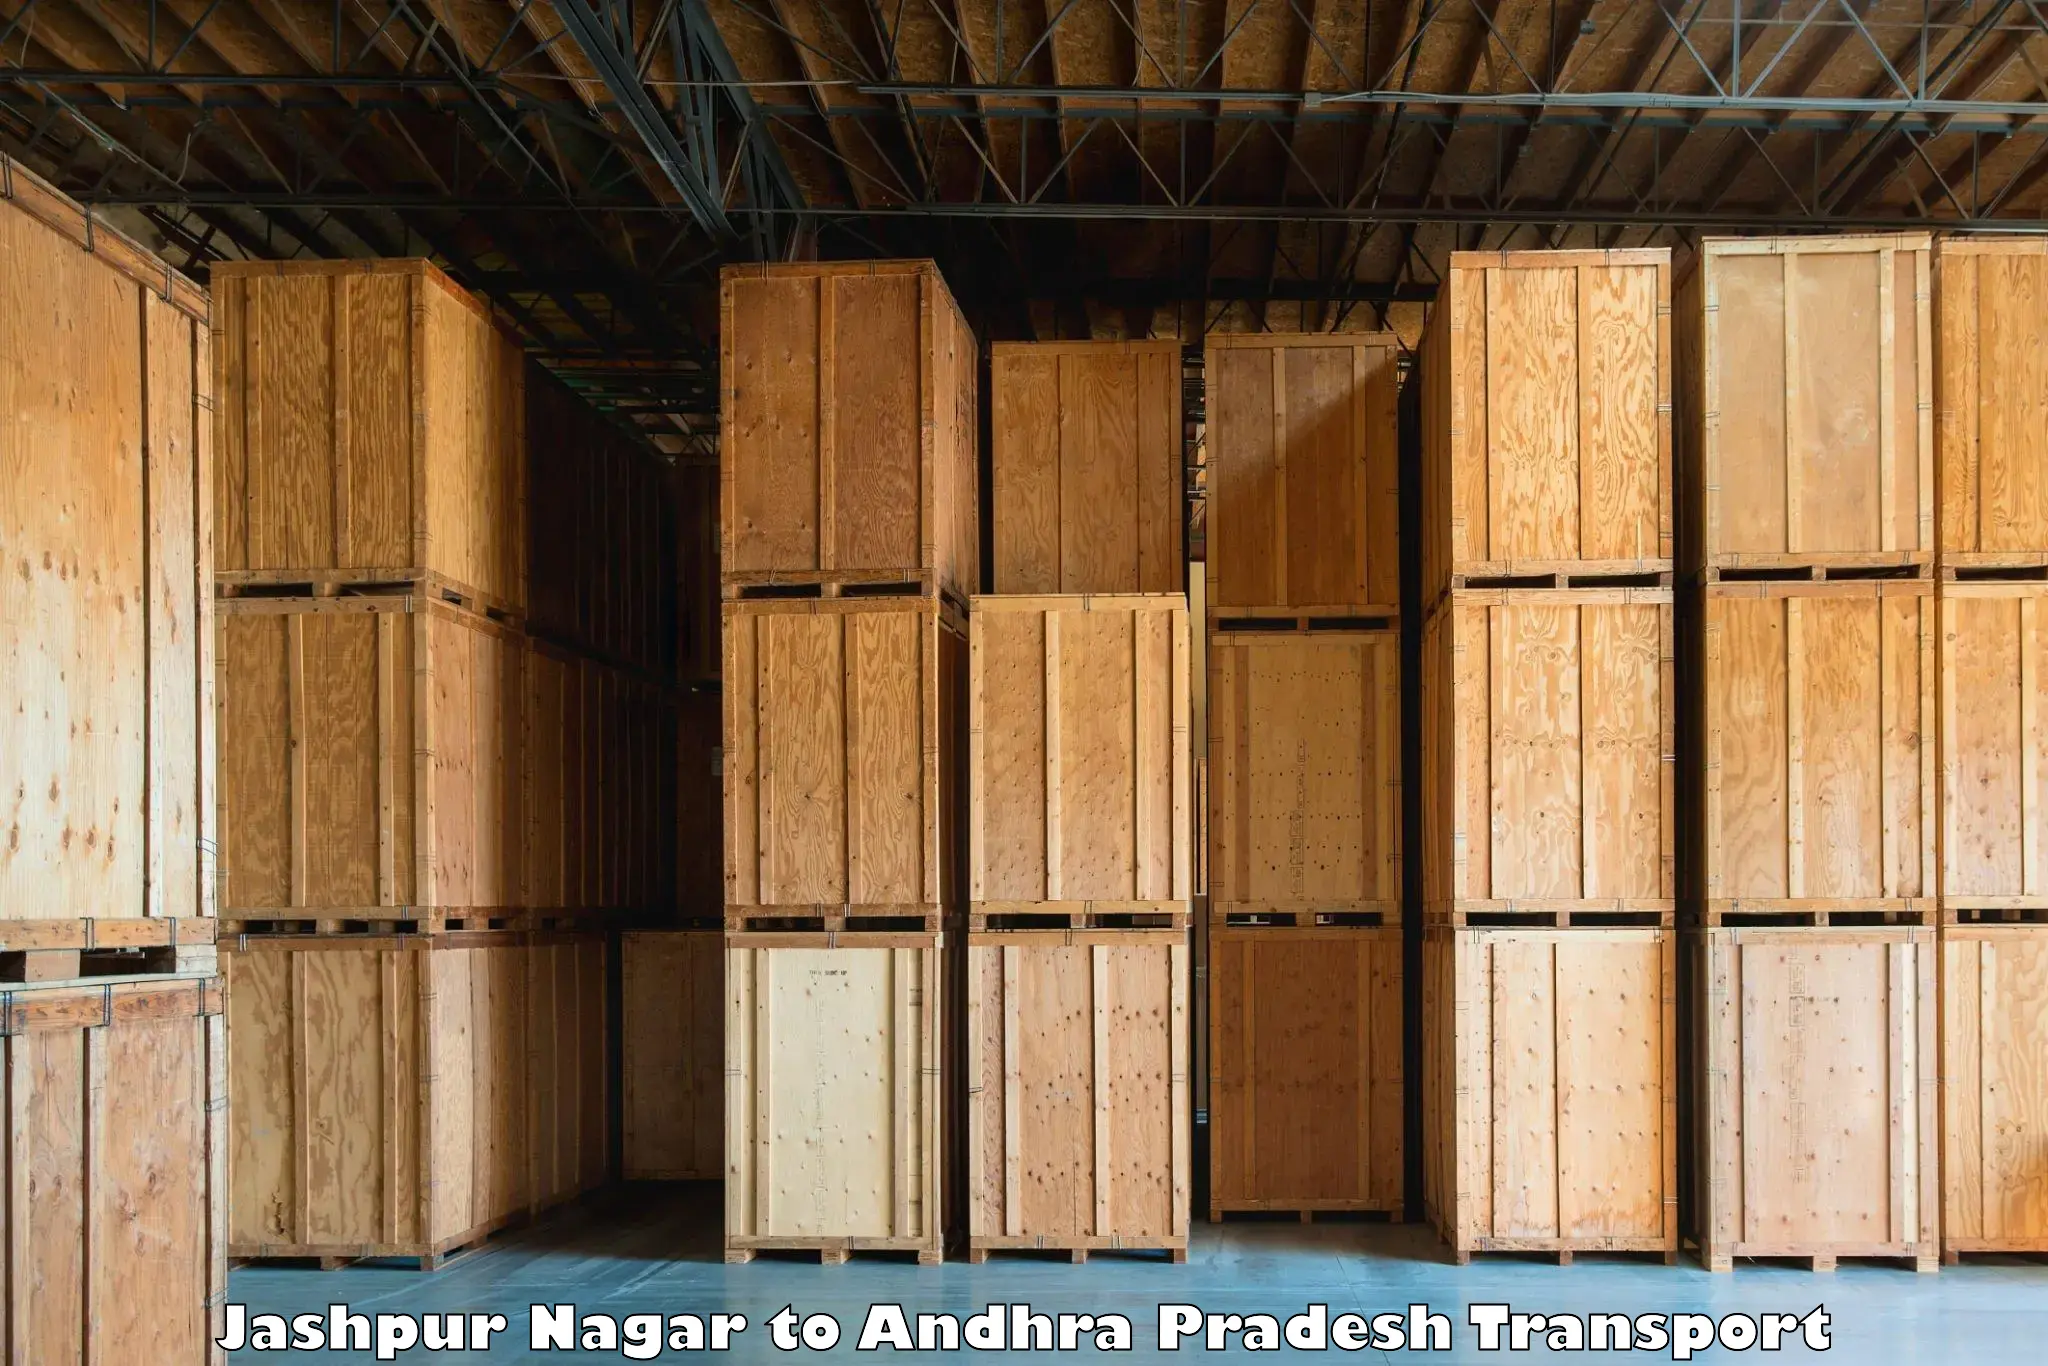 Truck transport companies in India Jashpur Nagar to Yerravaram